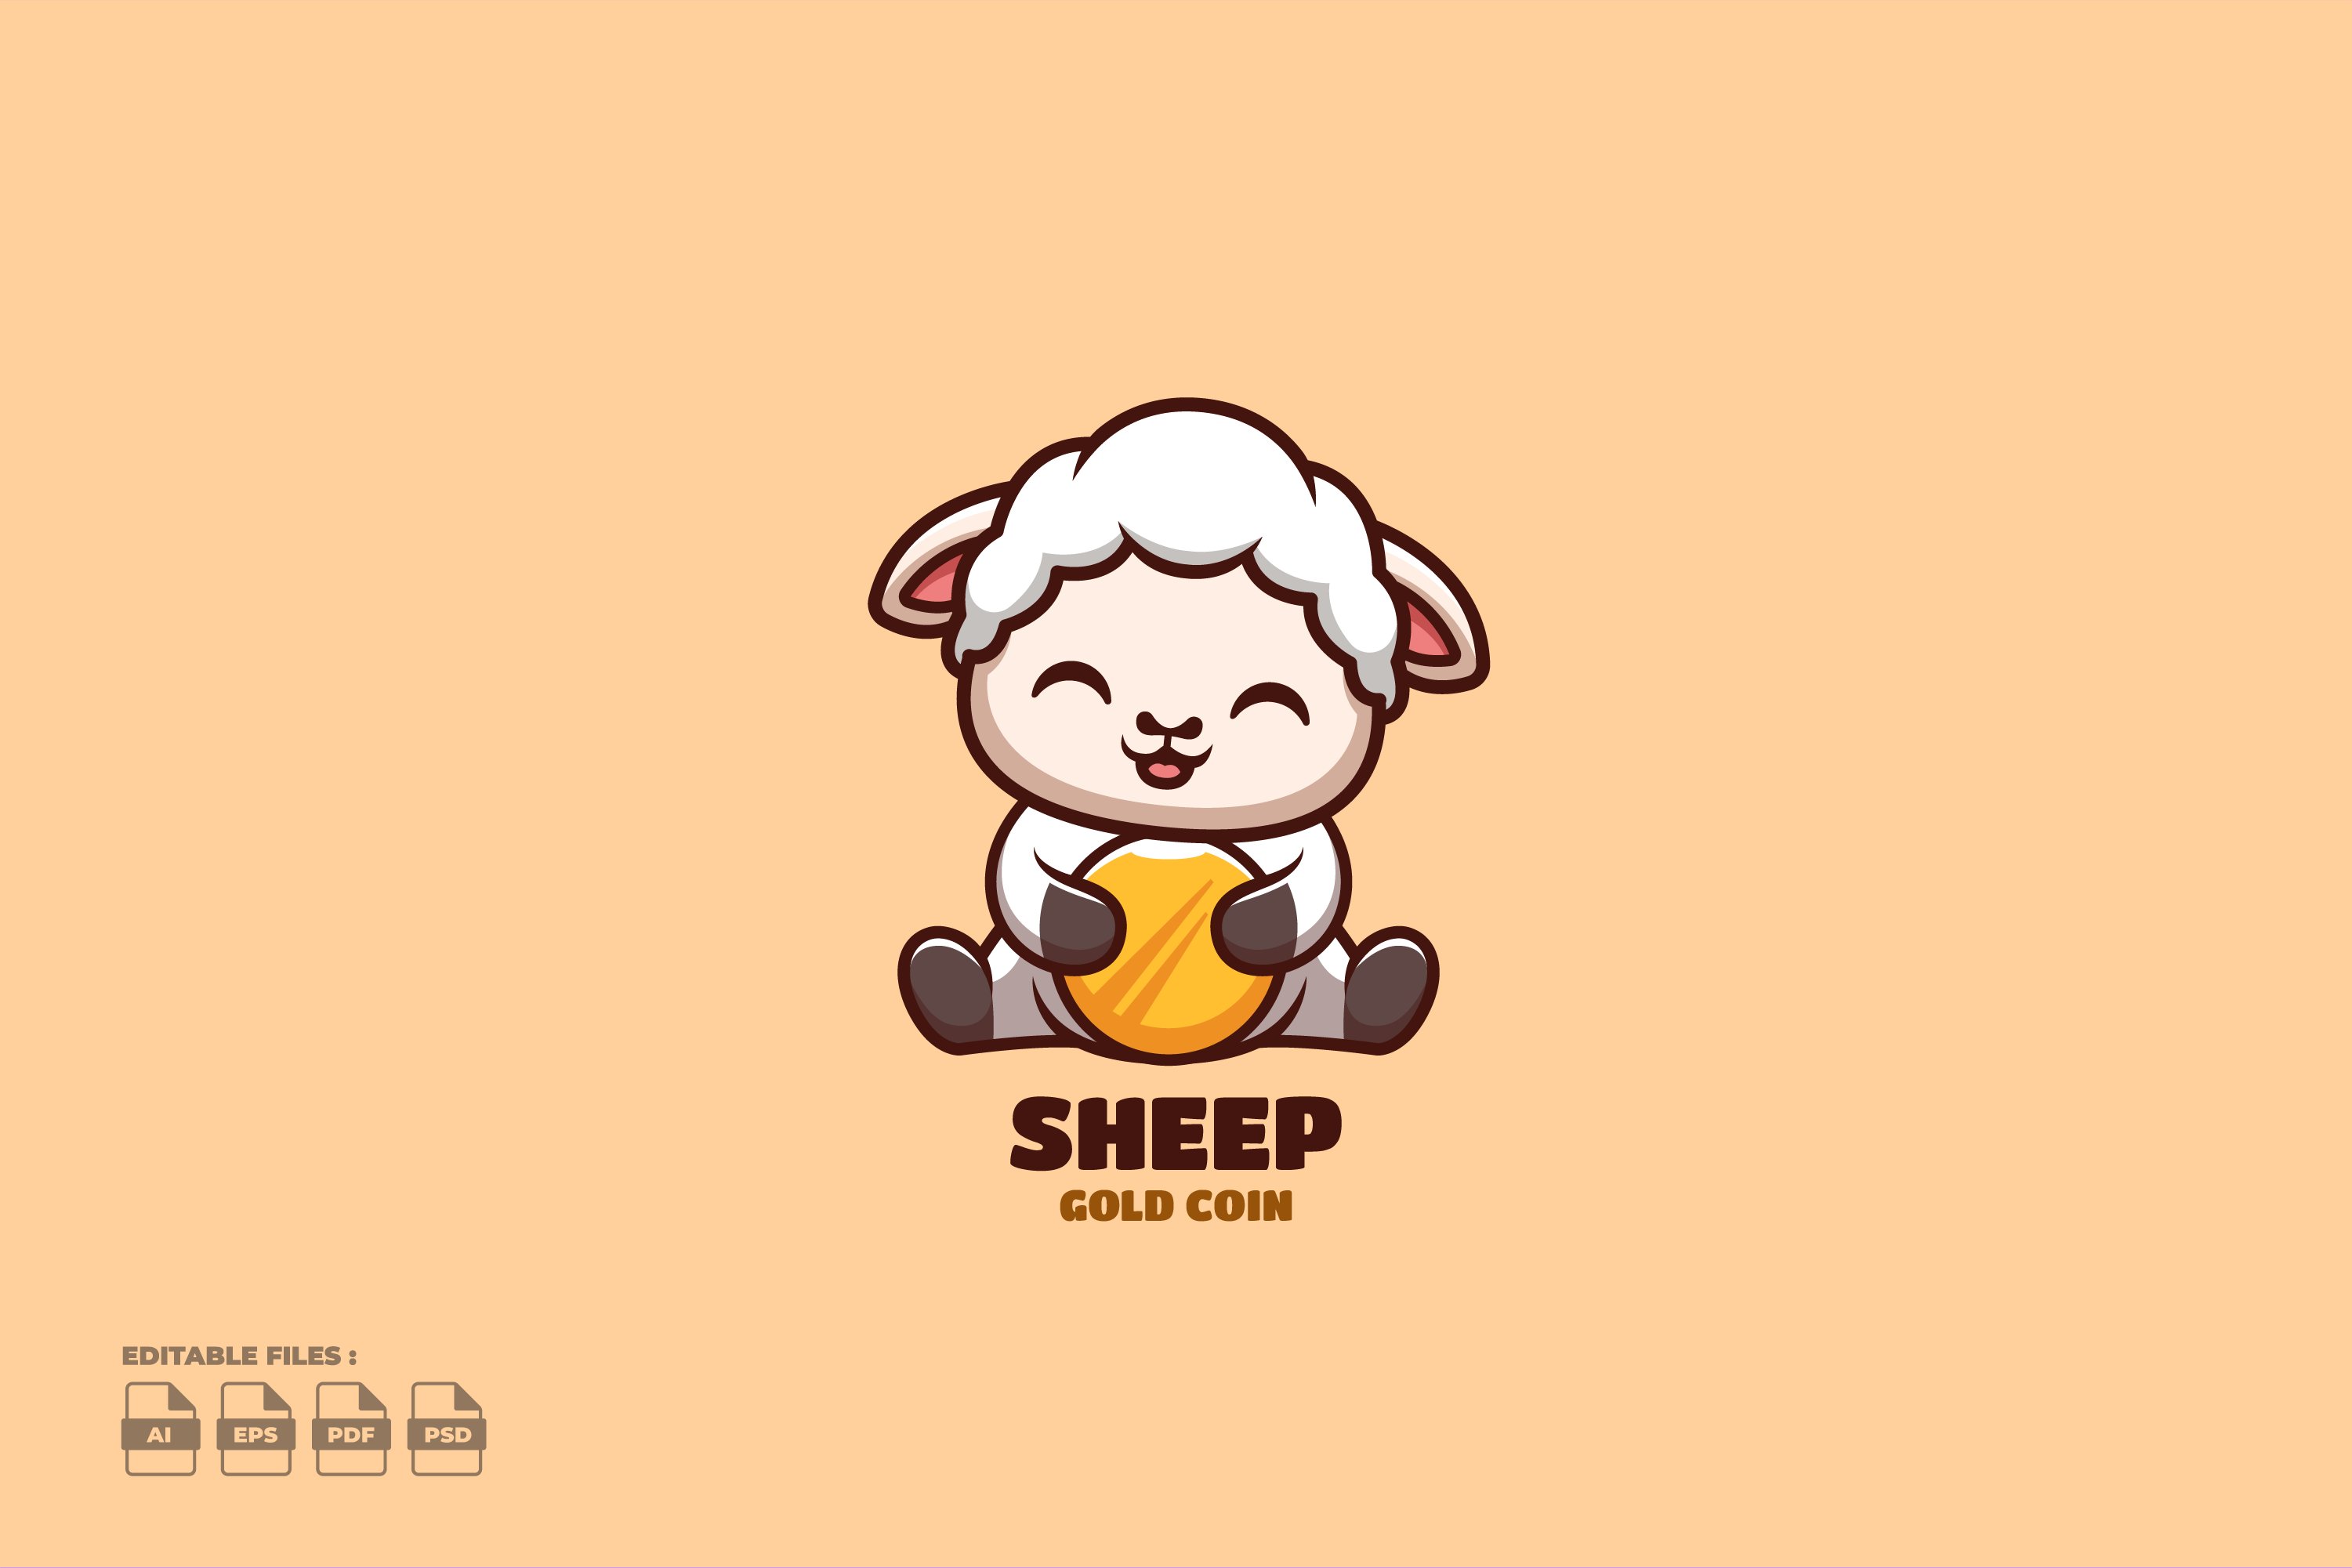 Gold Coin Sheep Cute Mascot Logo cover image.